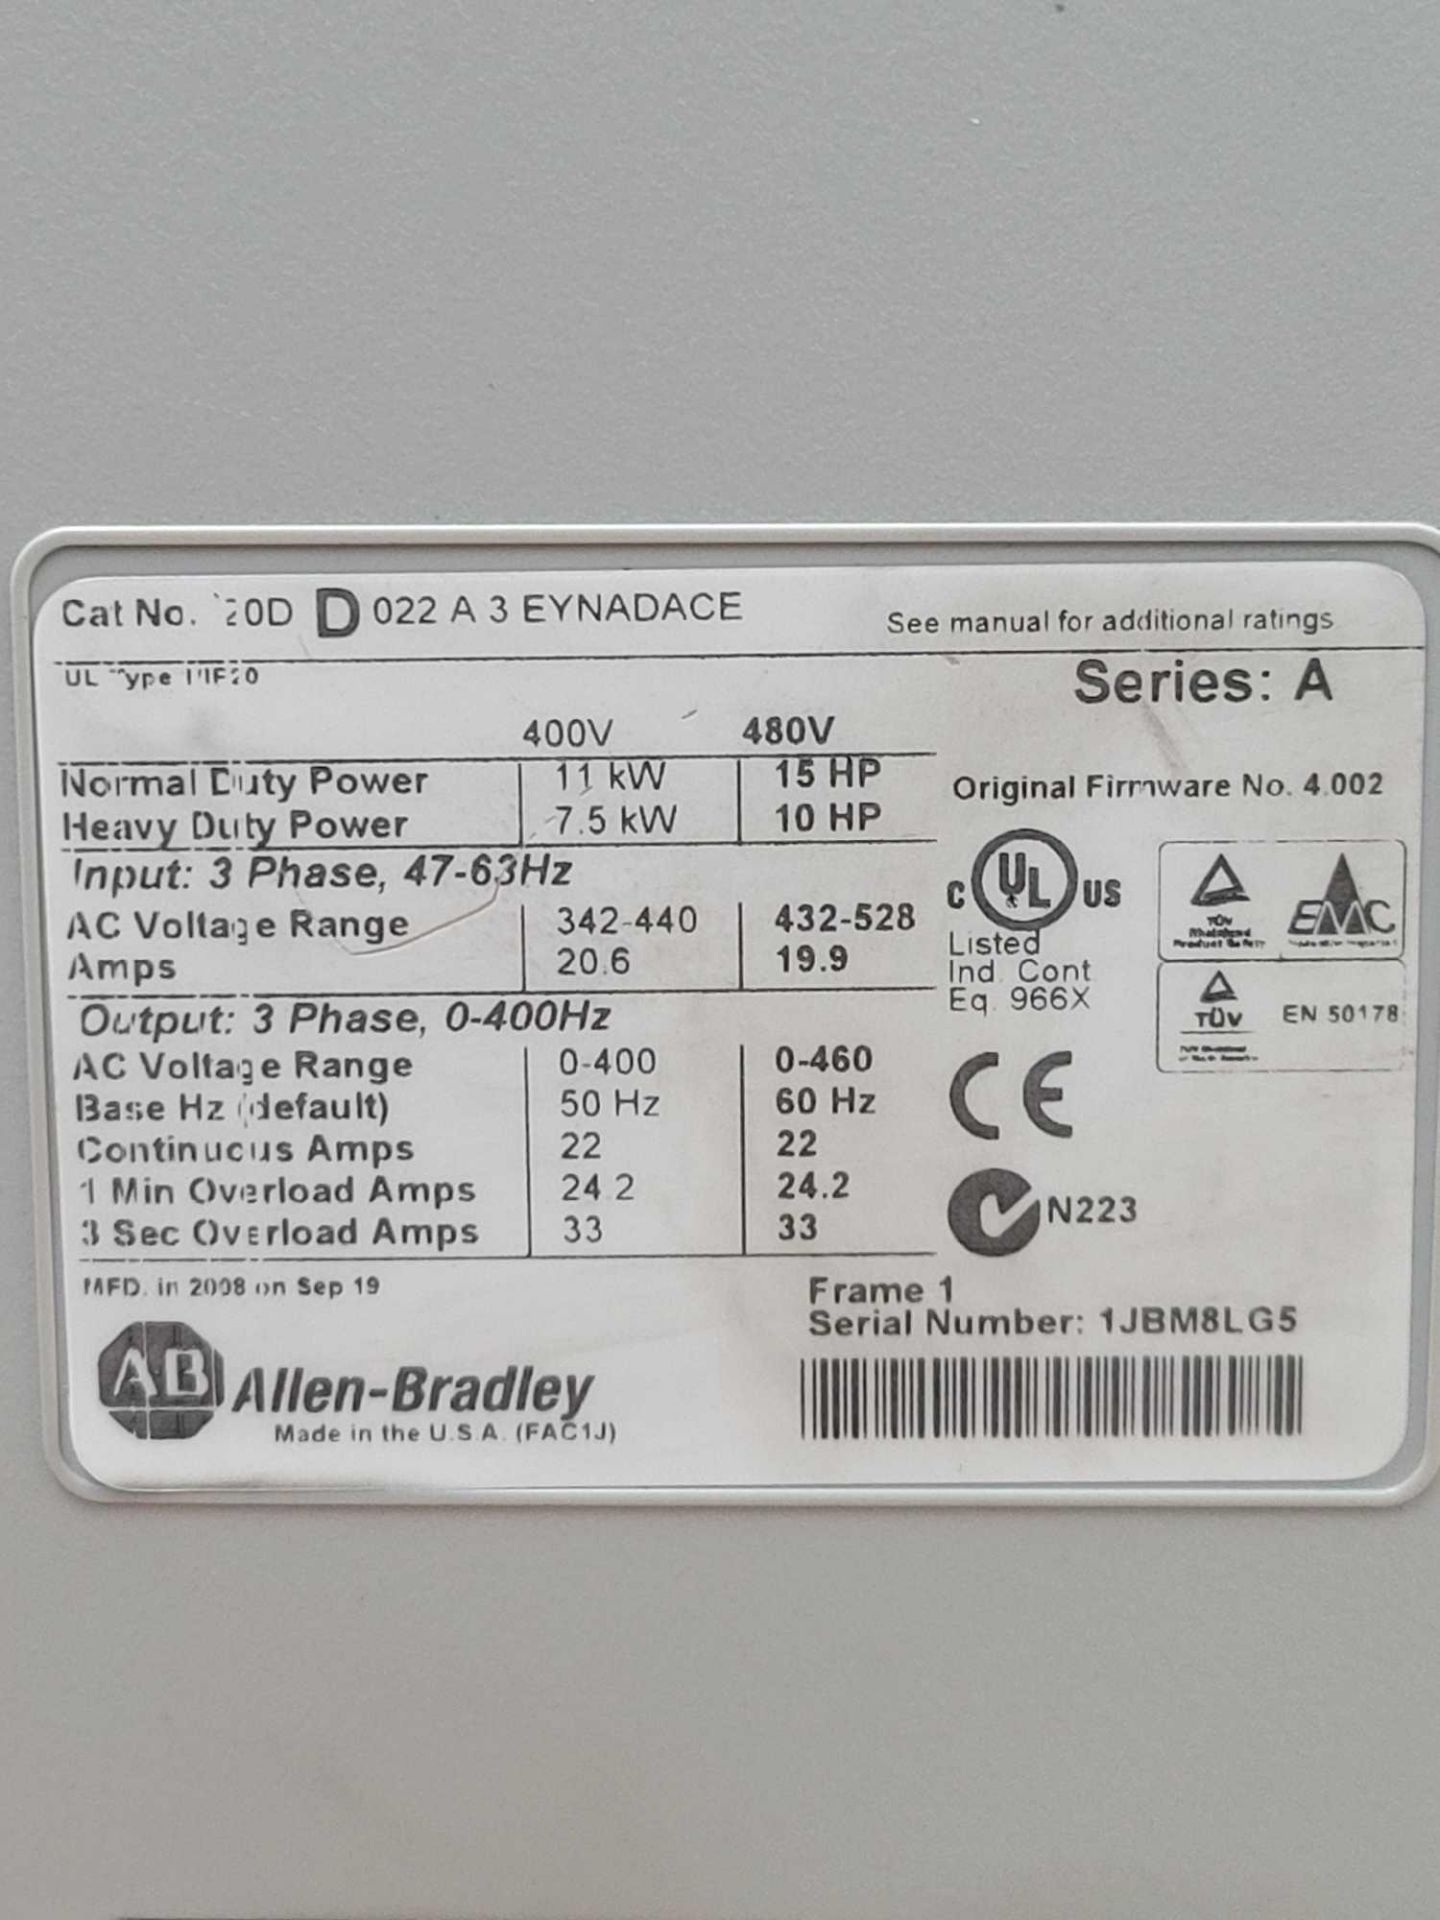 ALLEN BRADLEY 20DD022A3EYNADACE / Series A Powerflex 700S AC Drive  /  Lot Weight: 16.8 lbs - Image 7 of 7